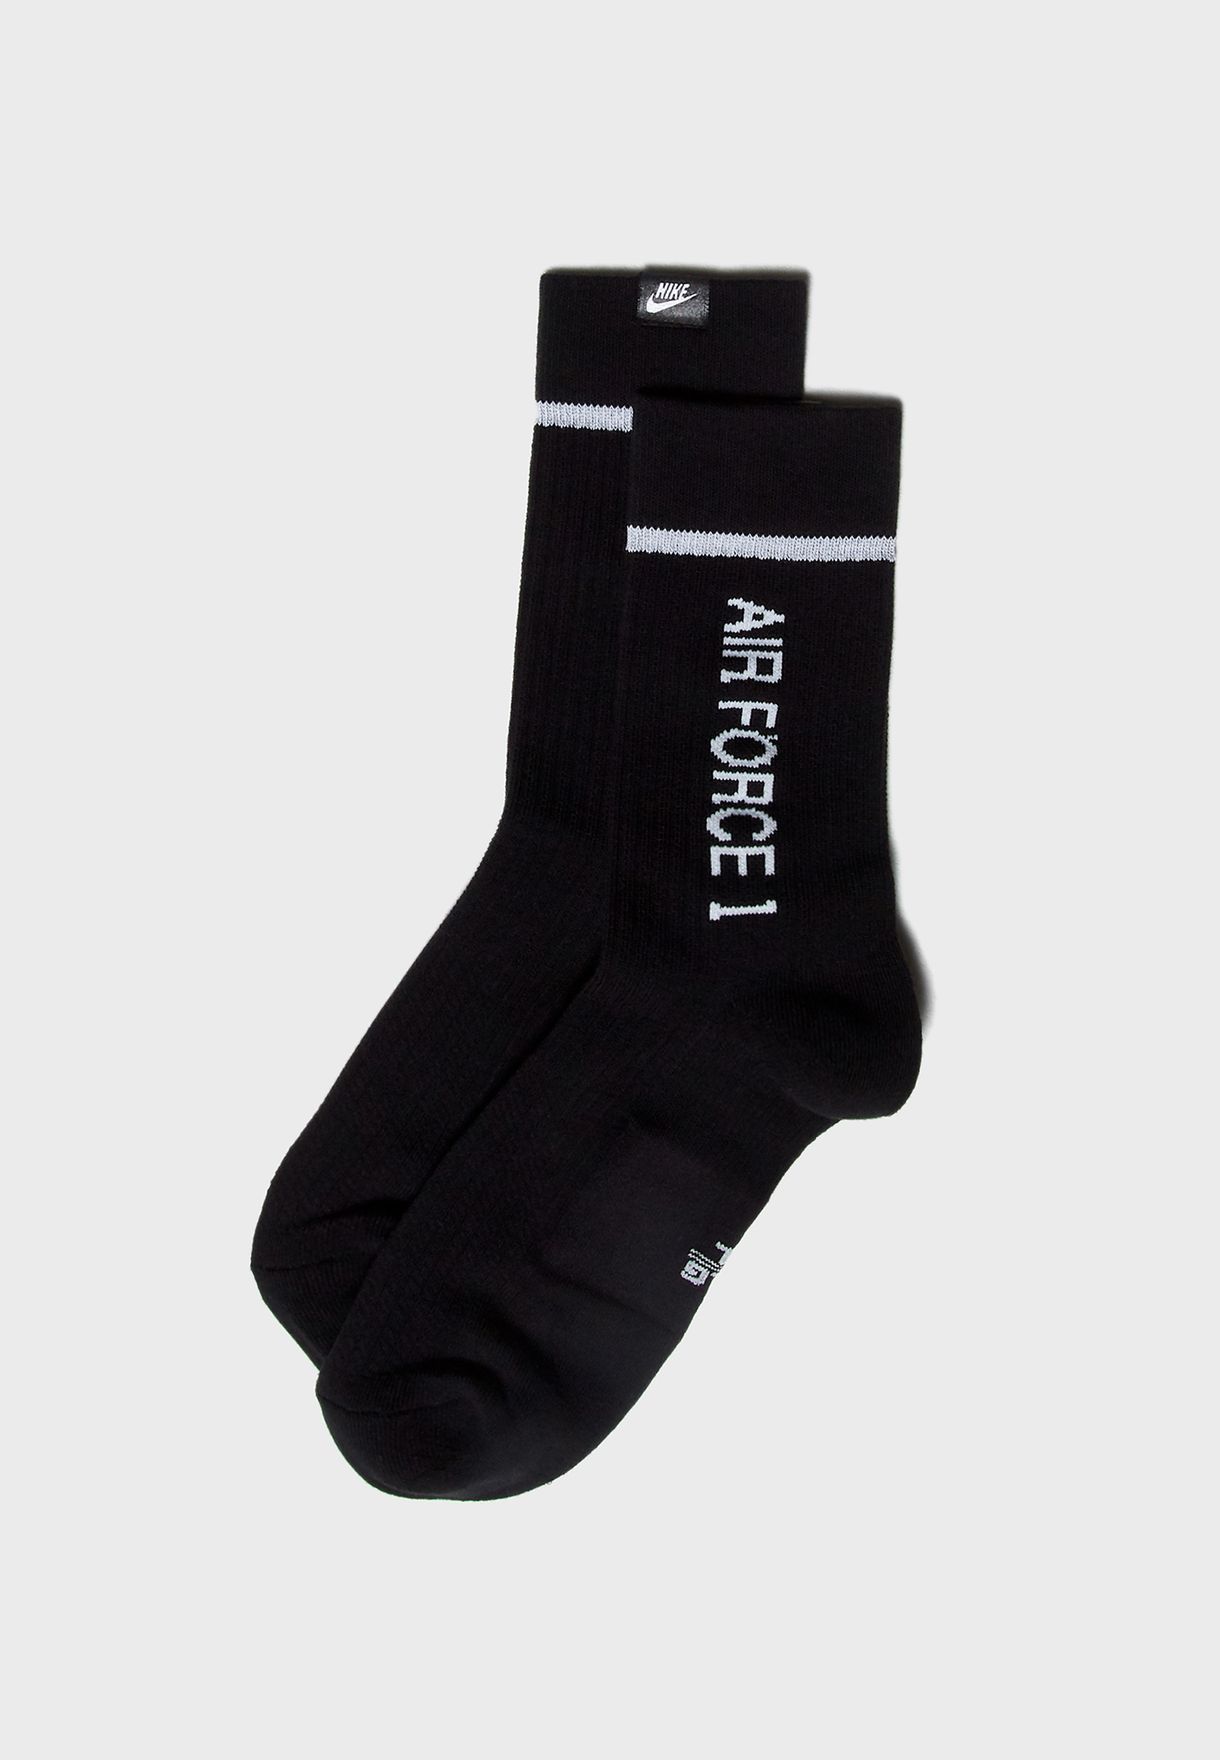 Buy Nike black 2 Pack AF1 Crew Socks 